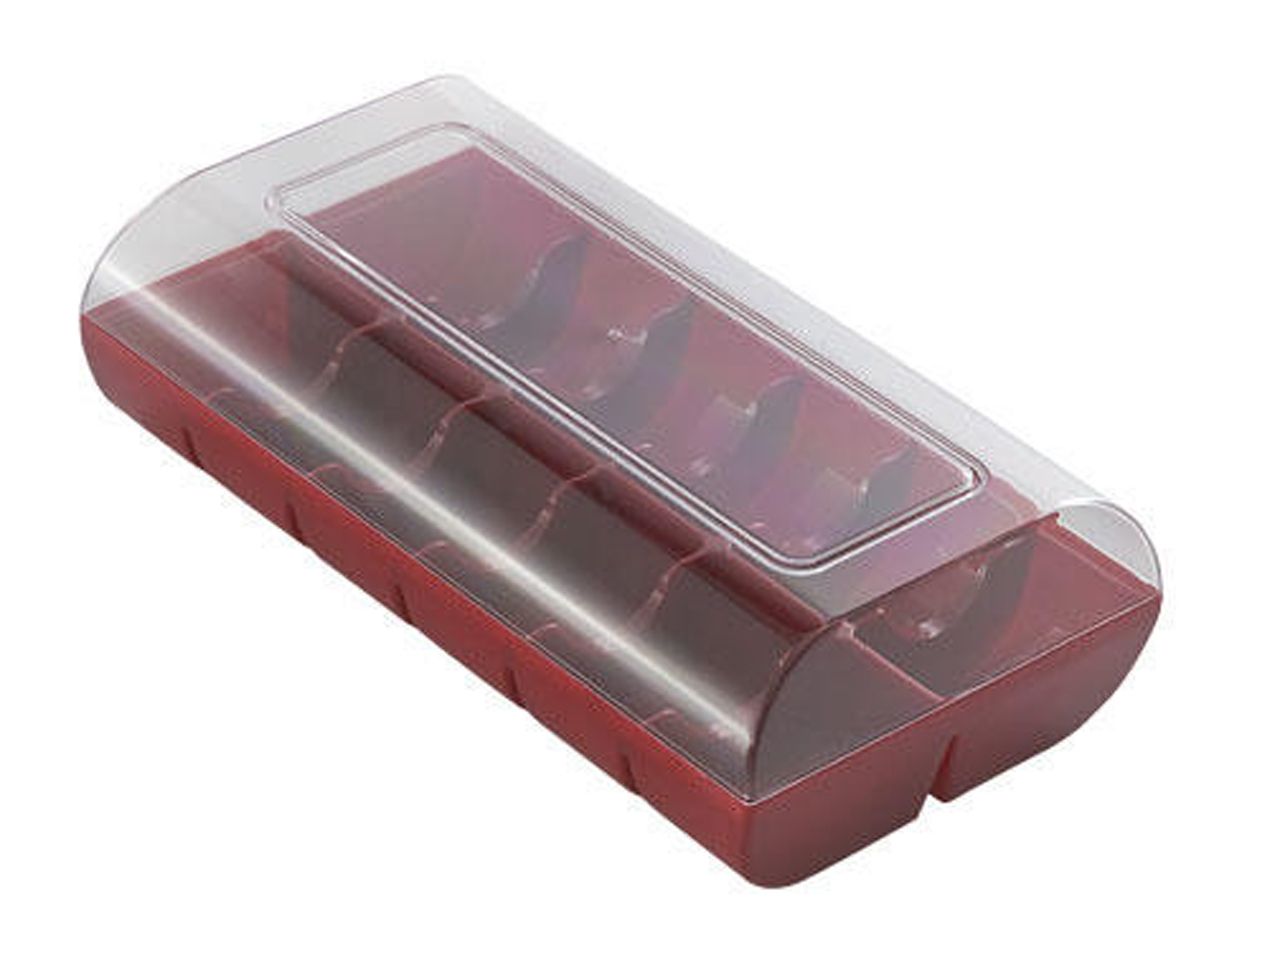 Macarons-Verpackung: Ruby, Kunststoff, Rubinrot & transparent, für 12 Macarons, 18,4 x 9,4 x 5,3 cm